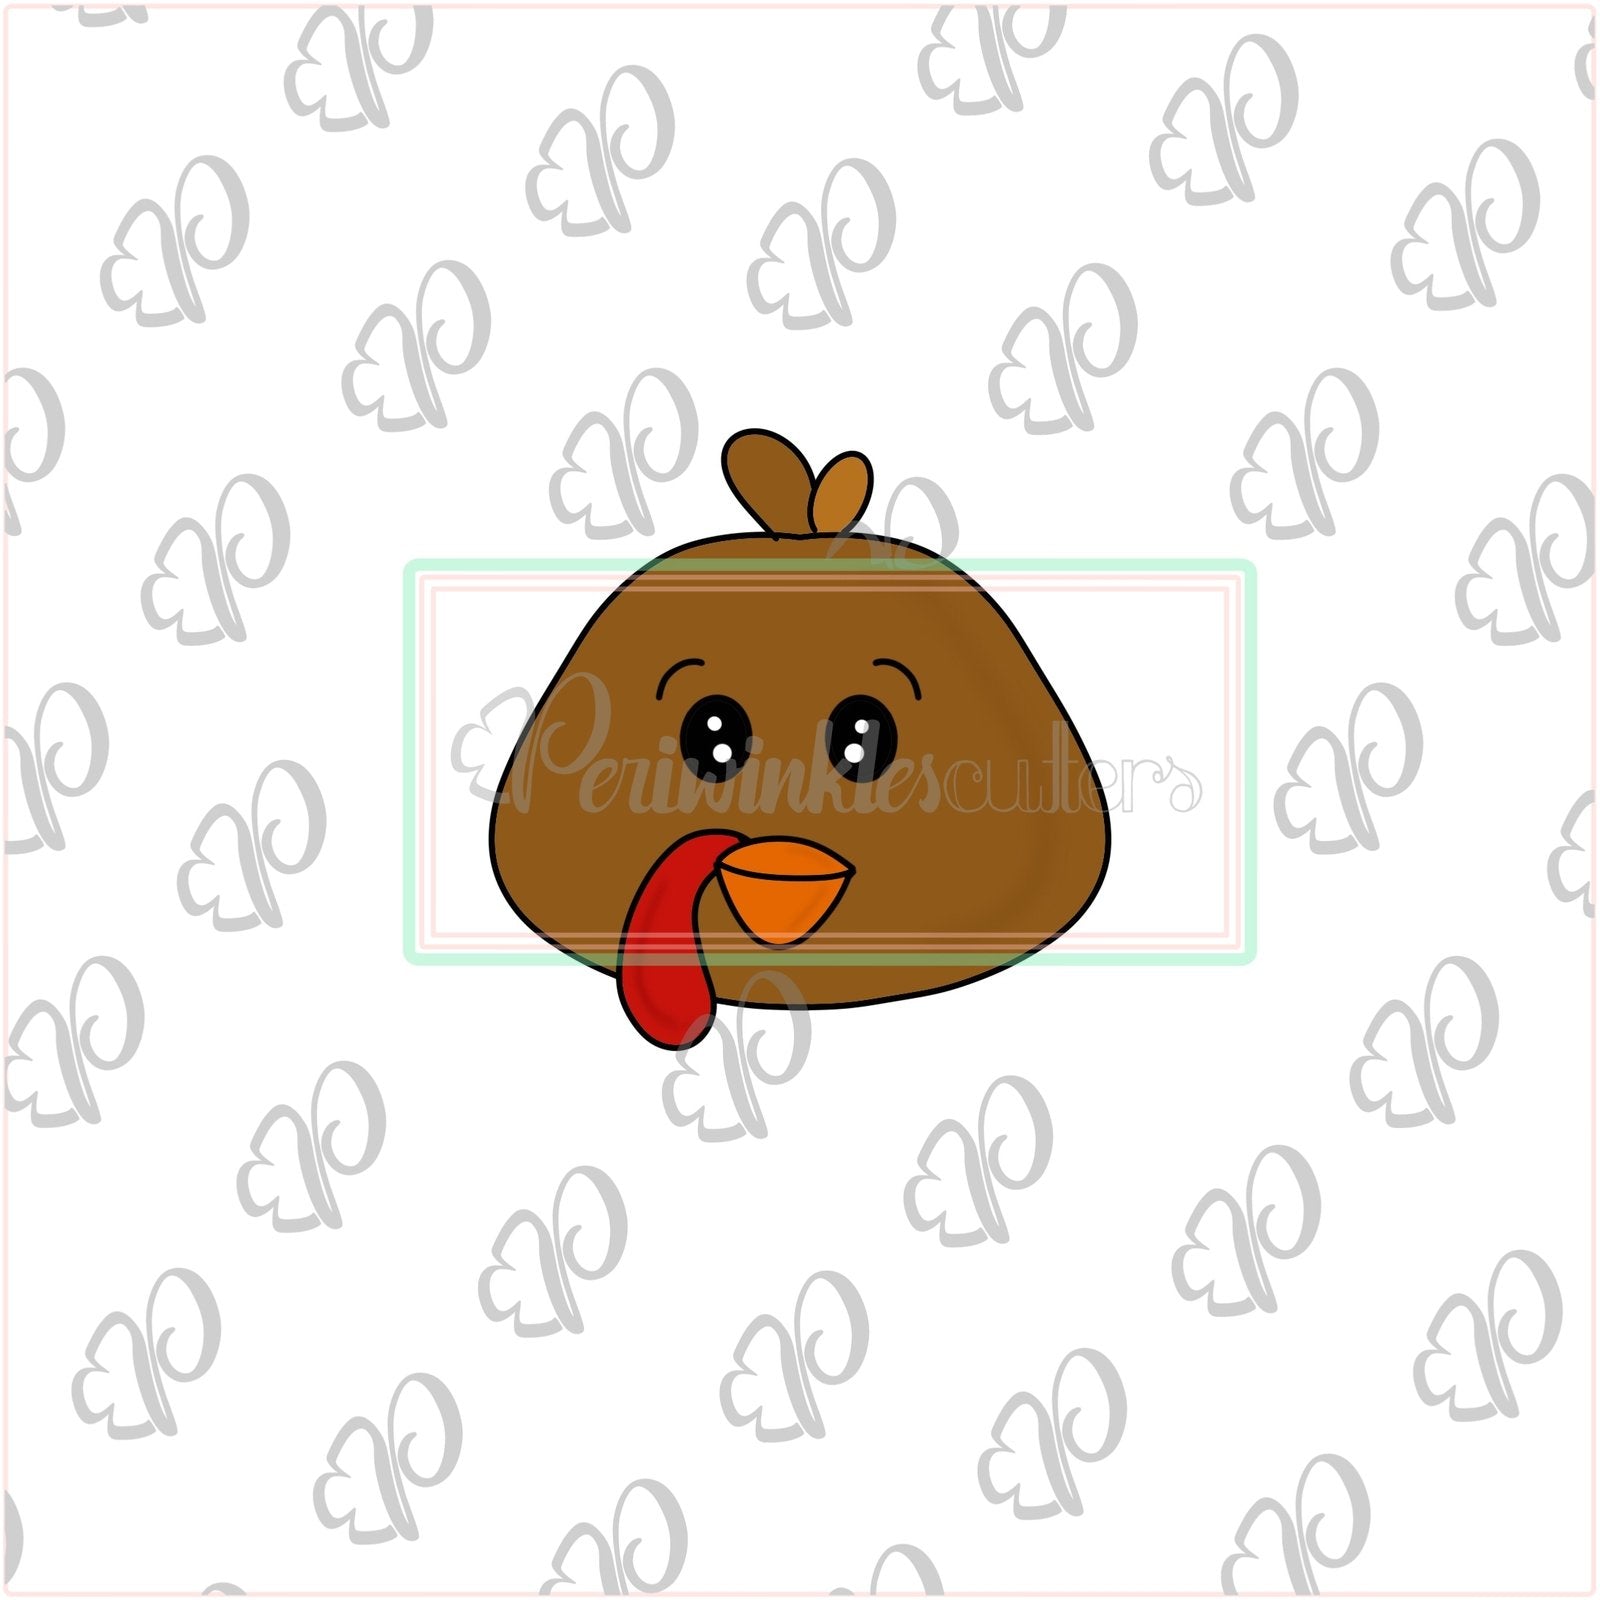 Pumpkin Pie Platter Cookie Cutter - Periwinkles Cutters